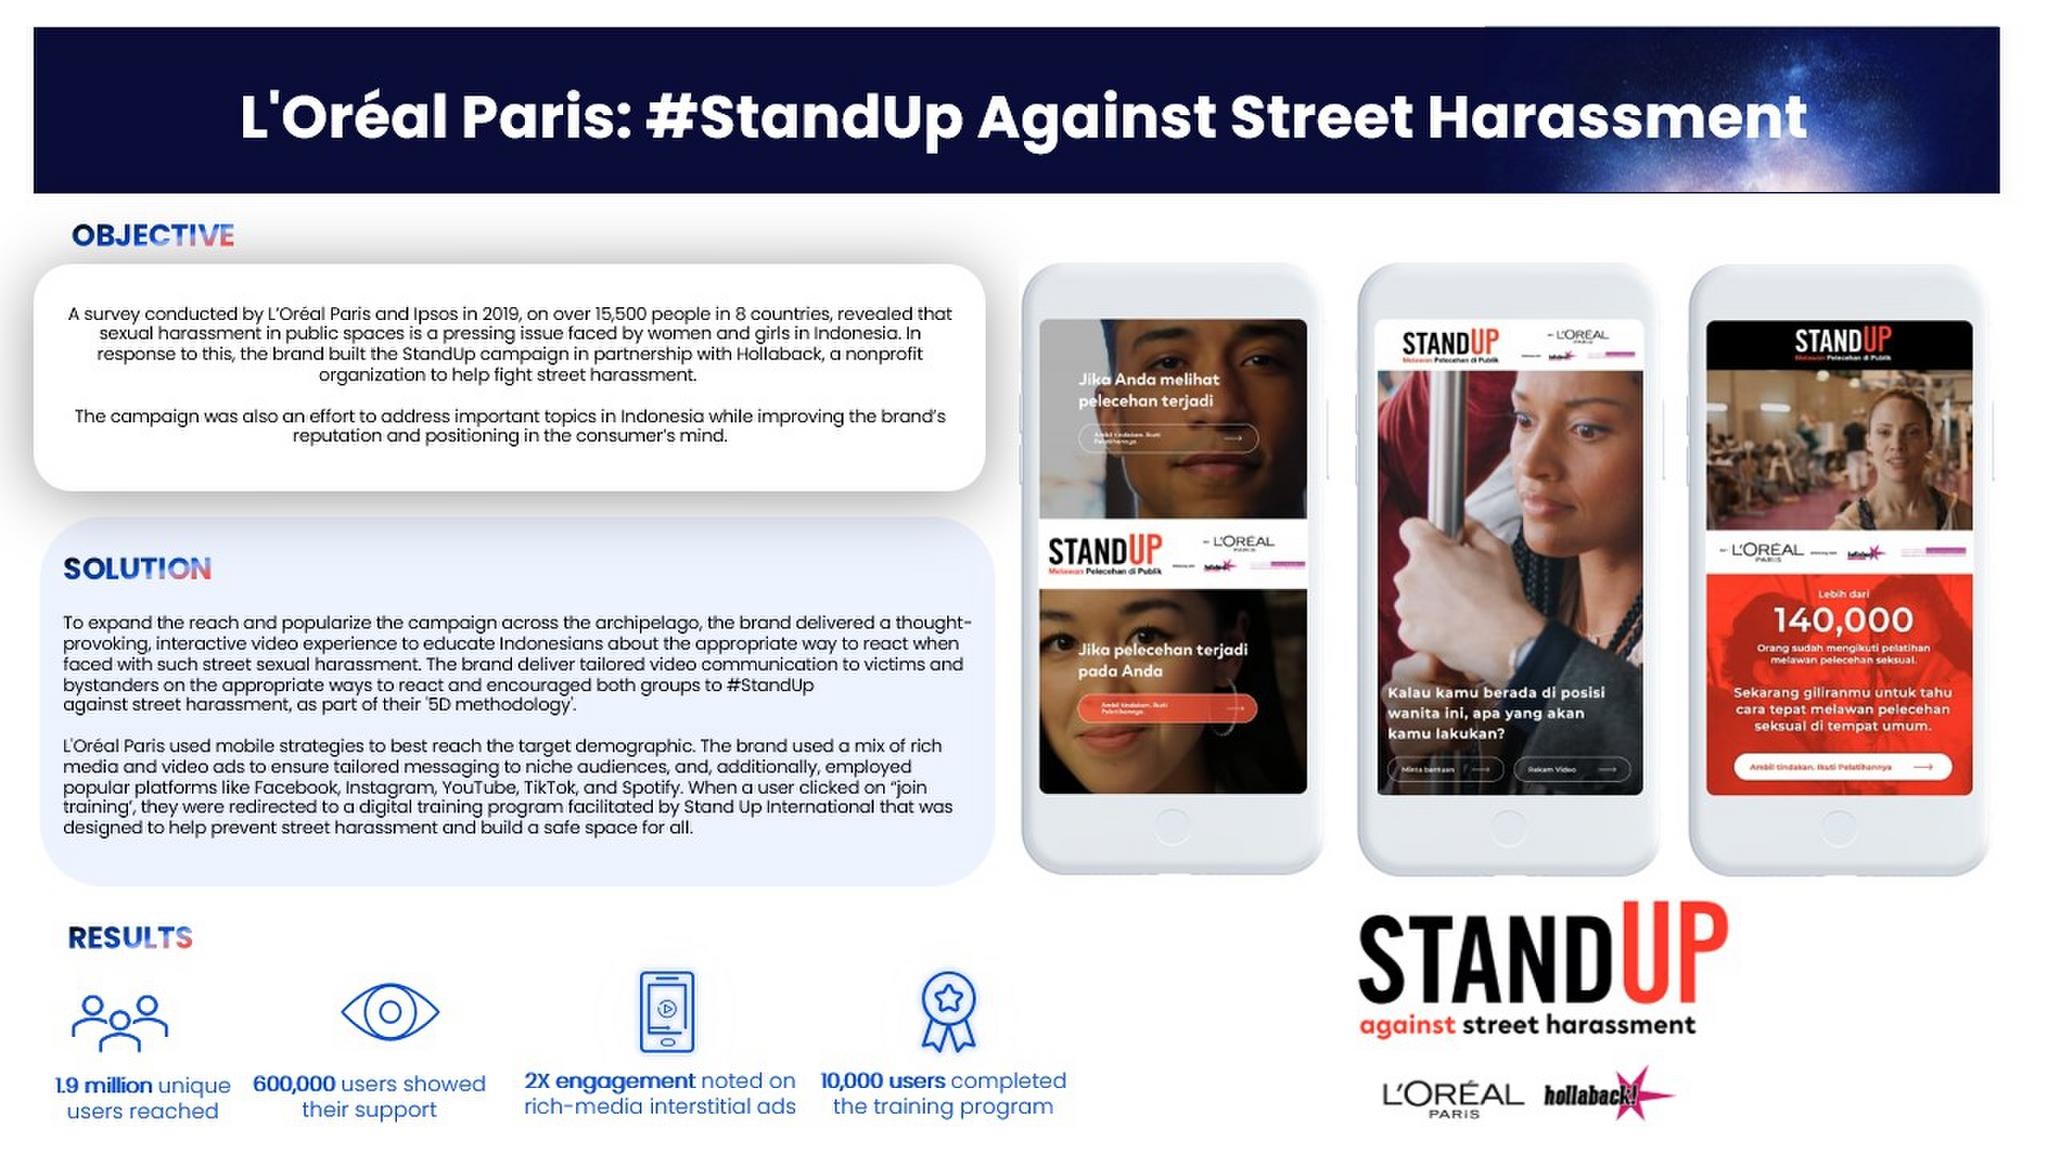 L'Oréal Paris: #StandUp to Street Harassment